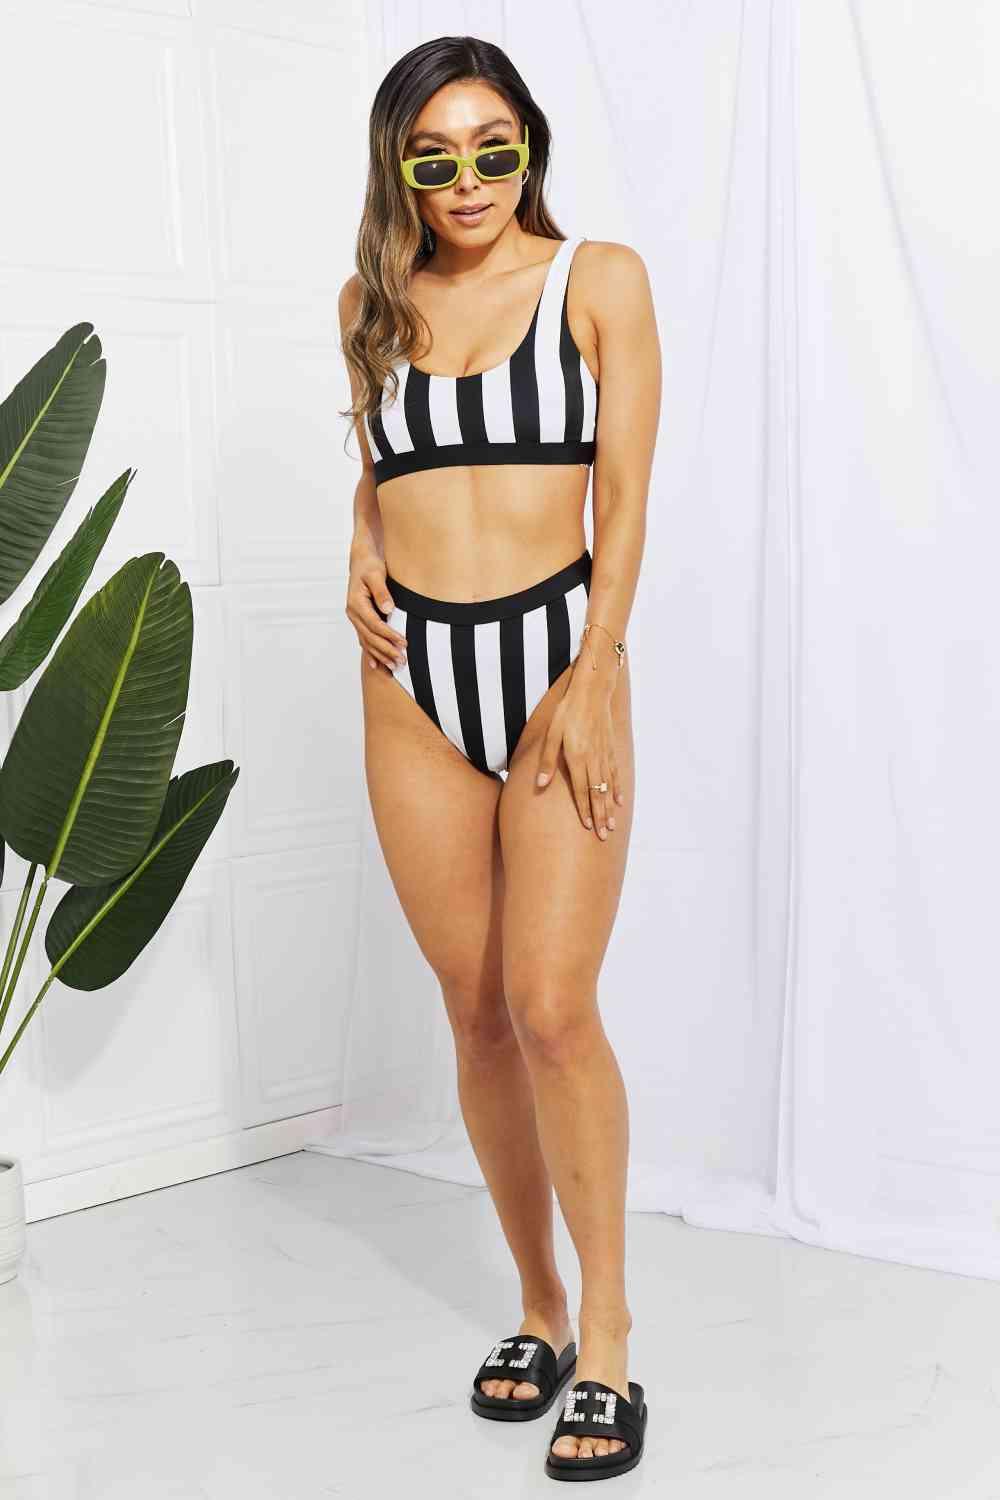 Women's Swimwear - 2PC Striped Tank High Waist Bikini